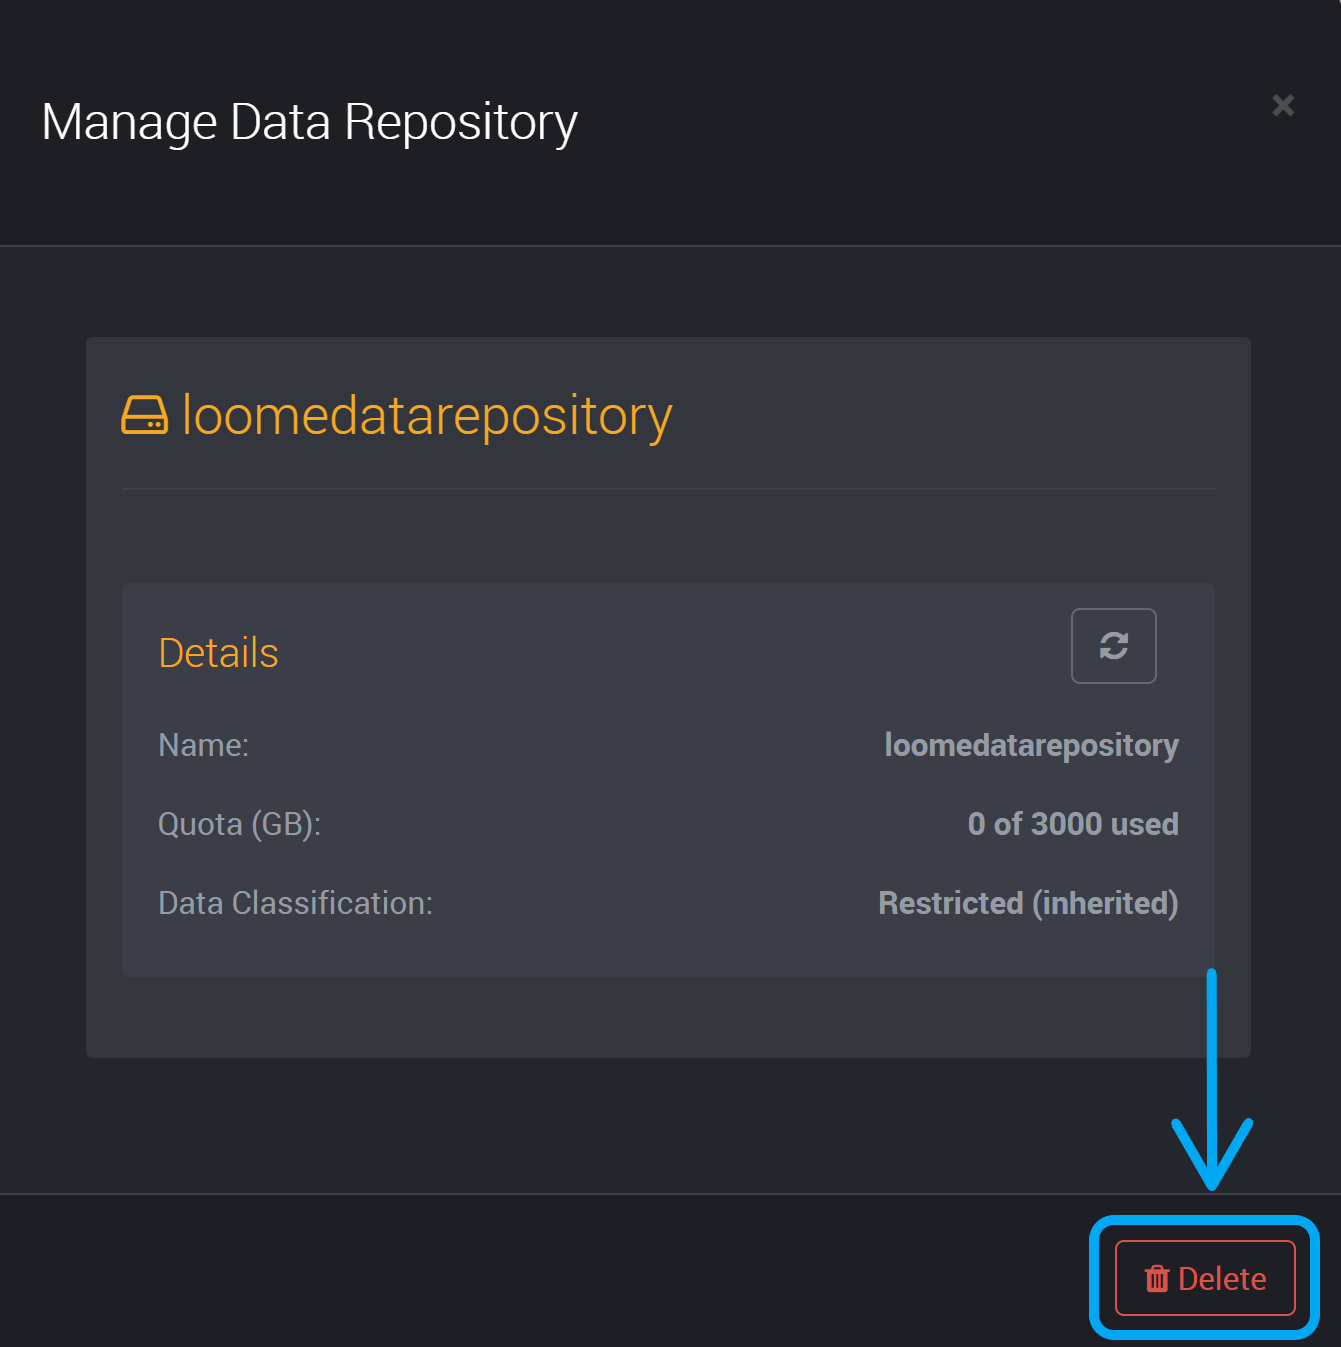 Delete this data repository